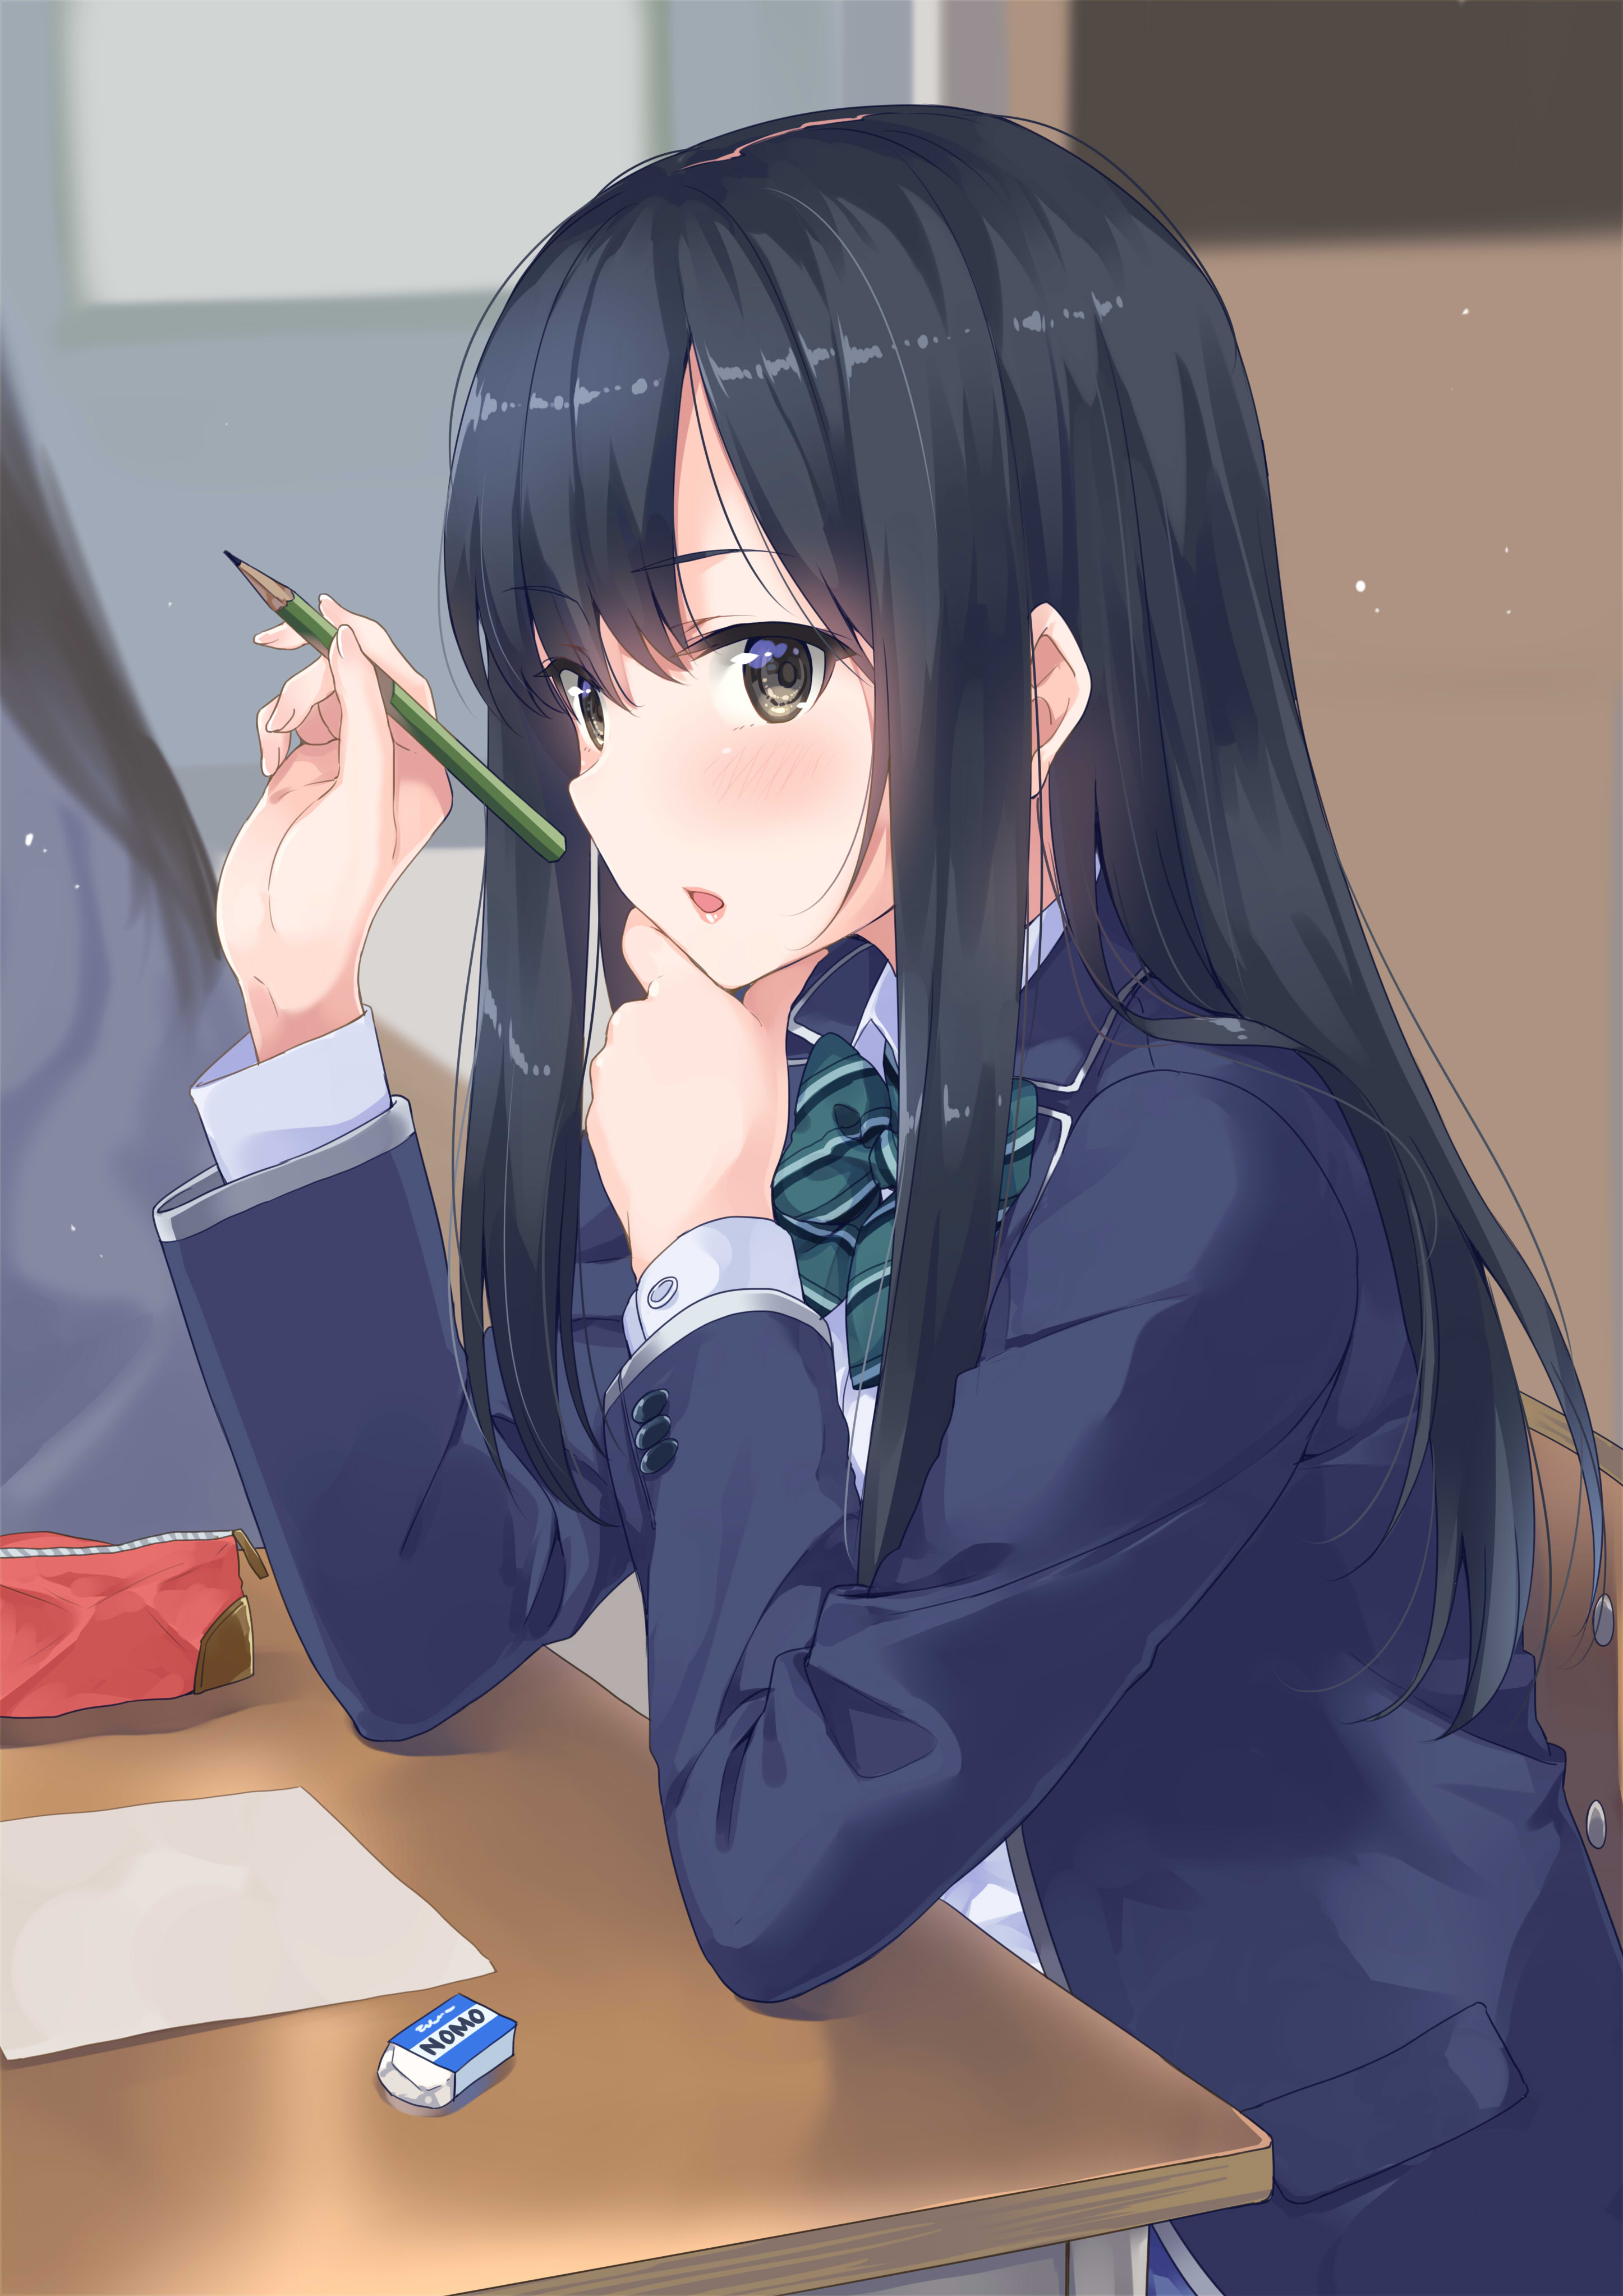 Anime 2893x4092 Unasaka anime girls anime portrait display parted lips looking at viewer school uniform classroom black hair gray eyes pencils Eraser